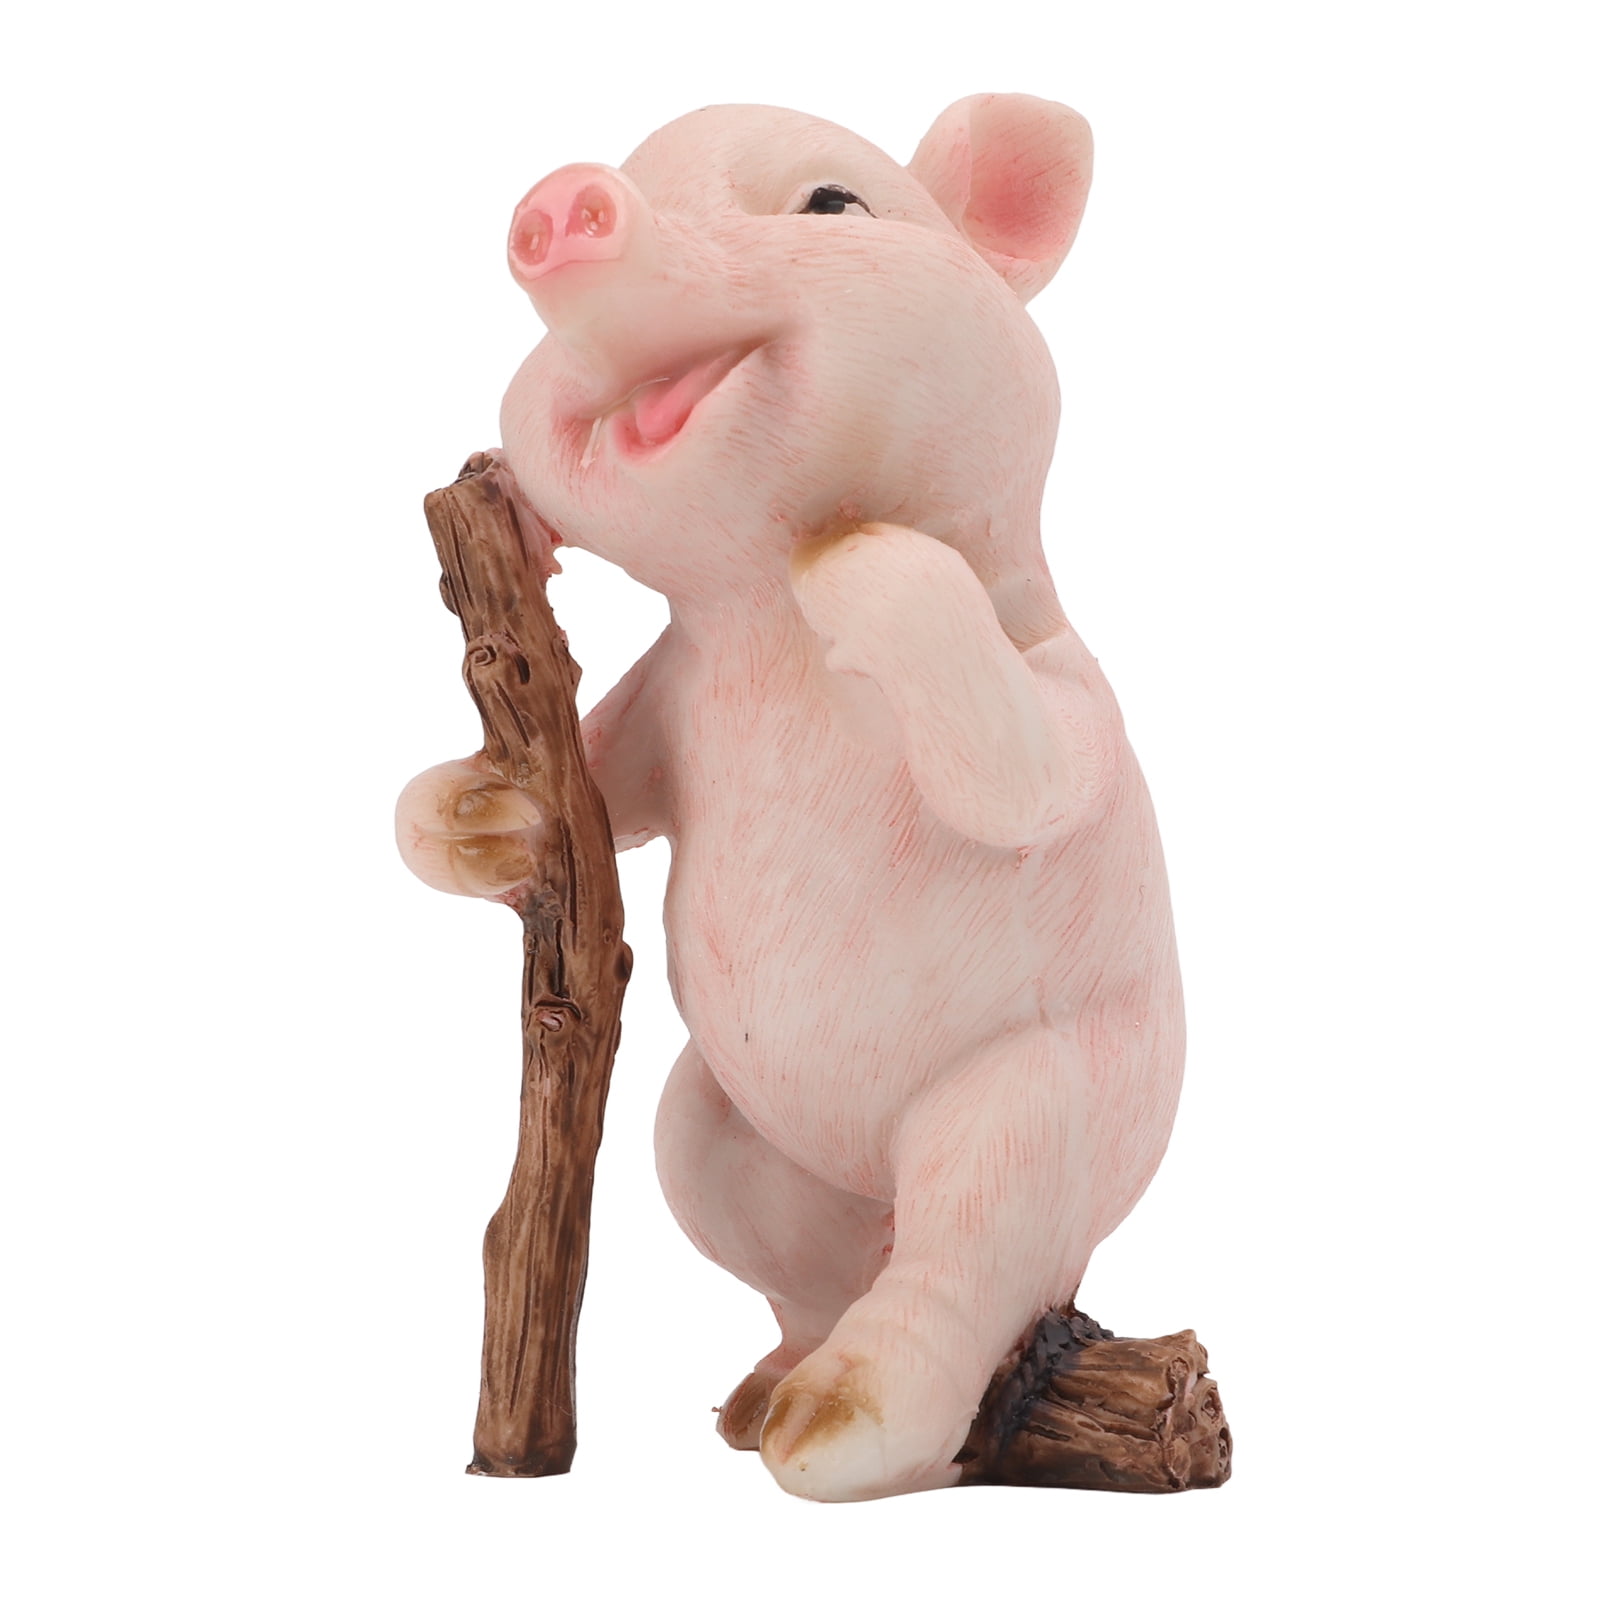 Simulation Animal Pig Model Toy Figurine Decor Plastic Animal Model Kids G RX 